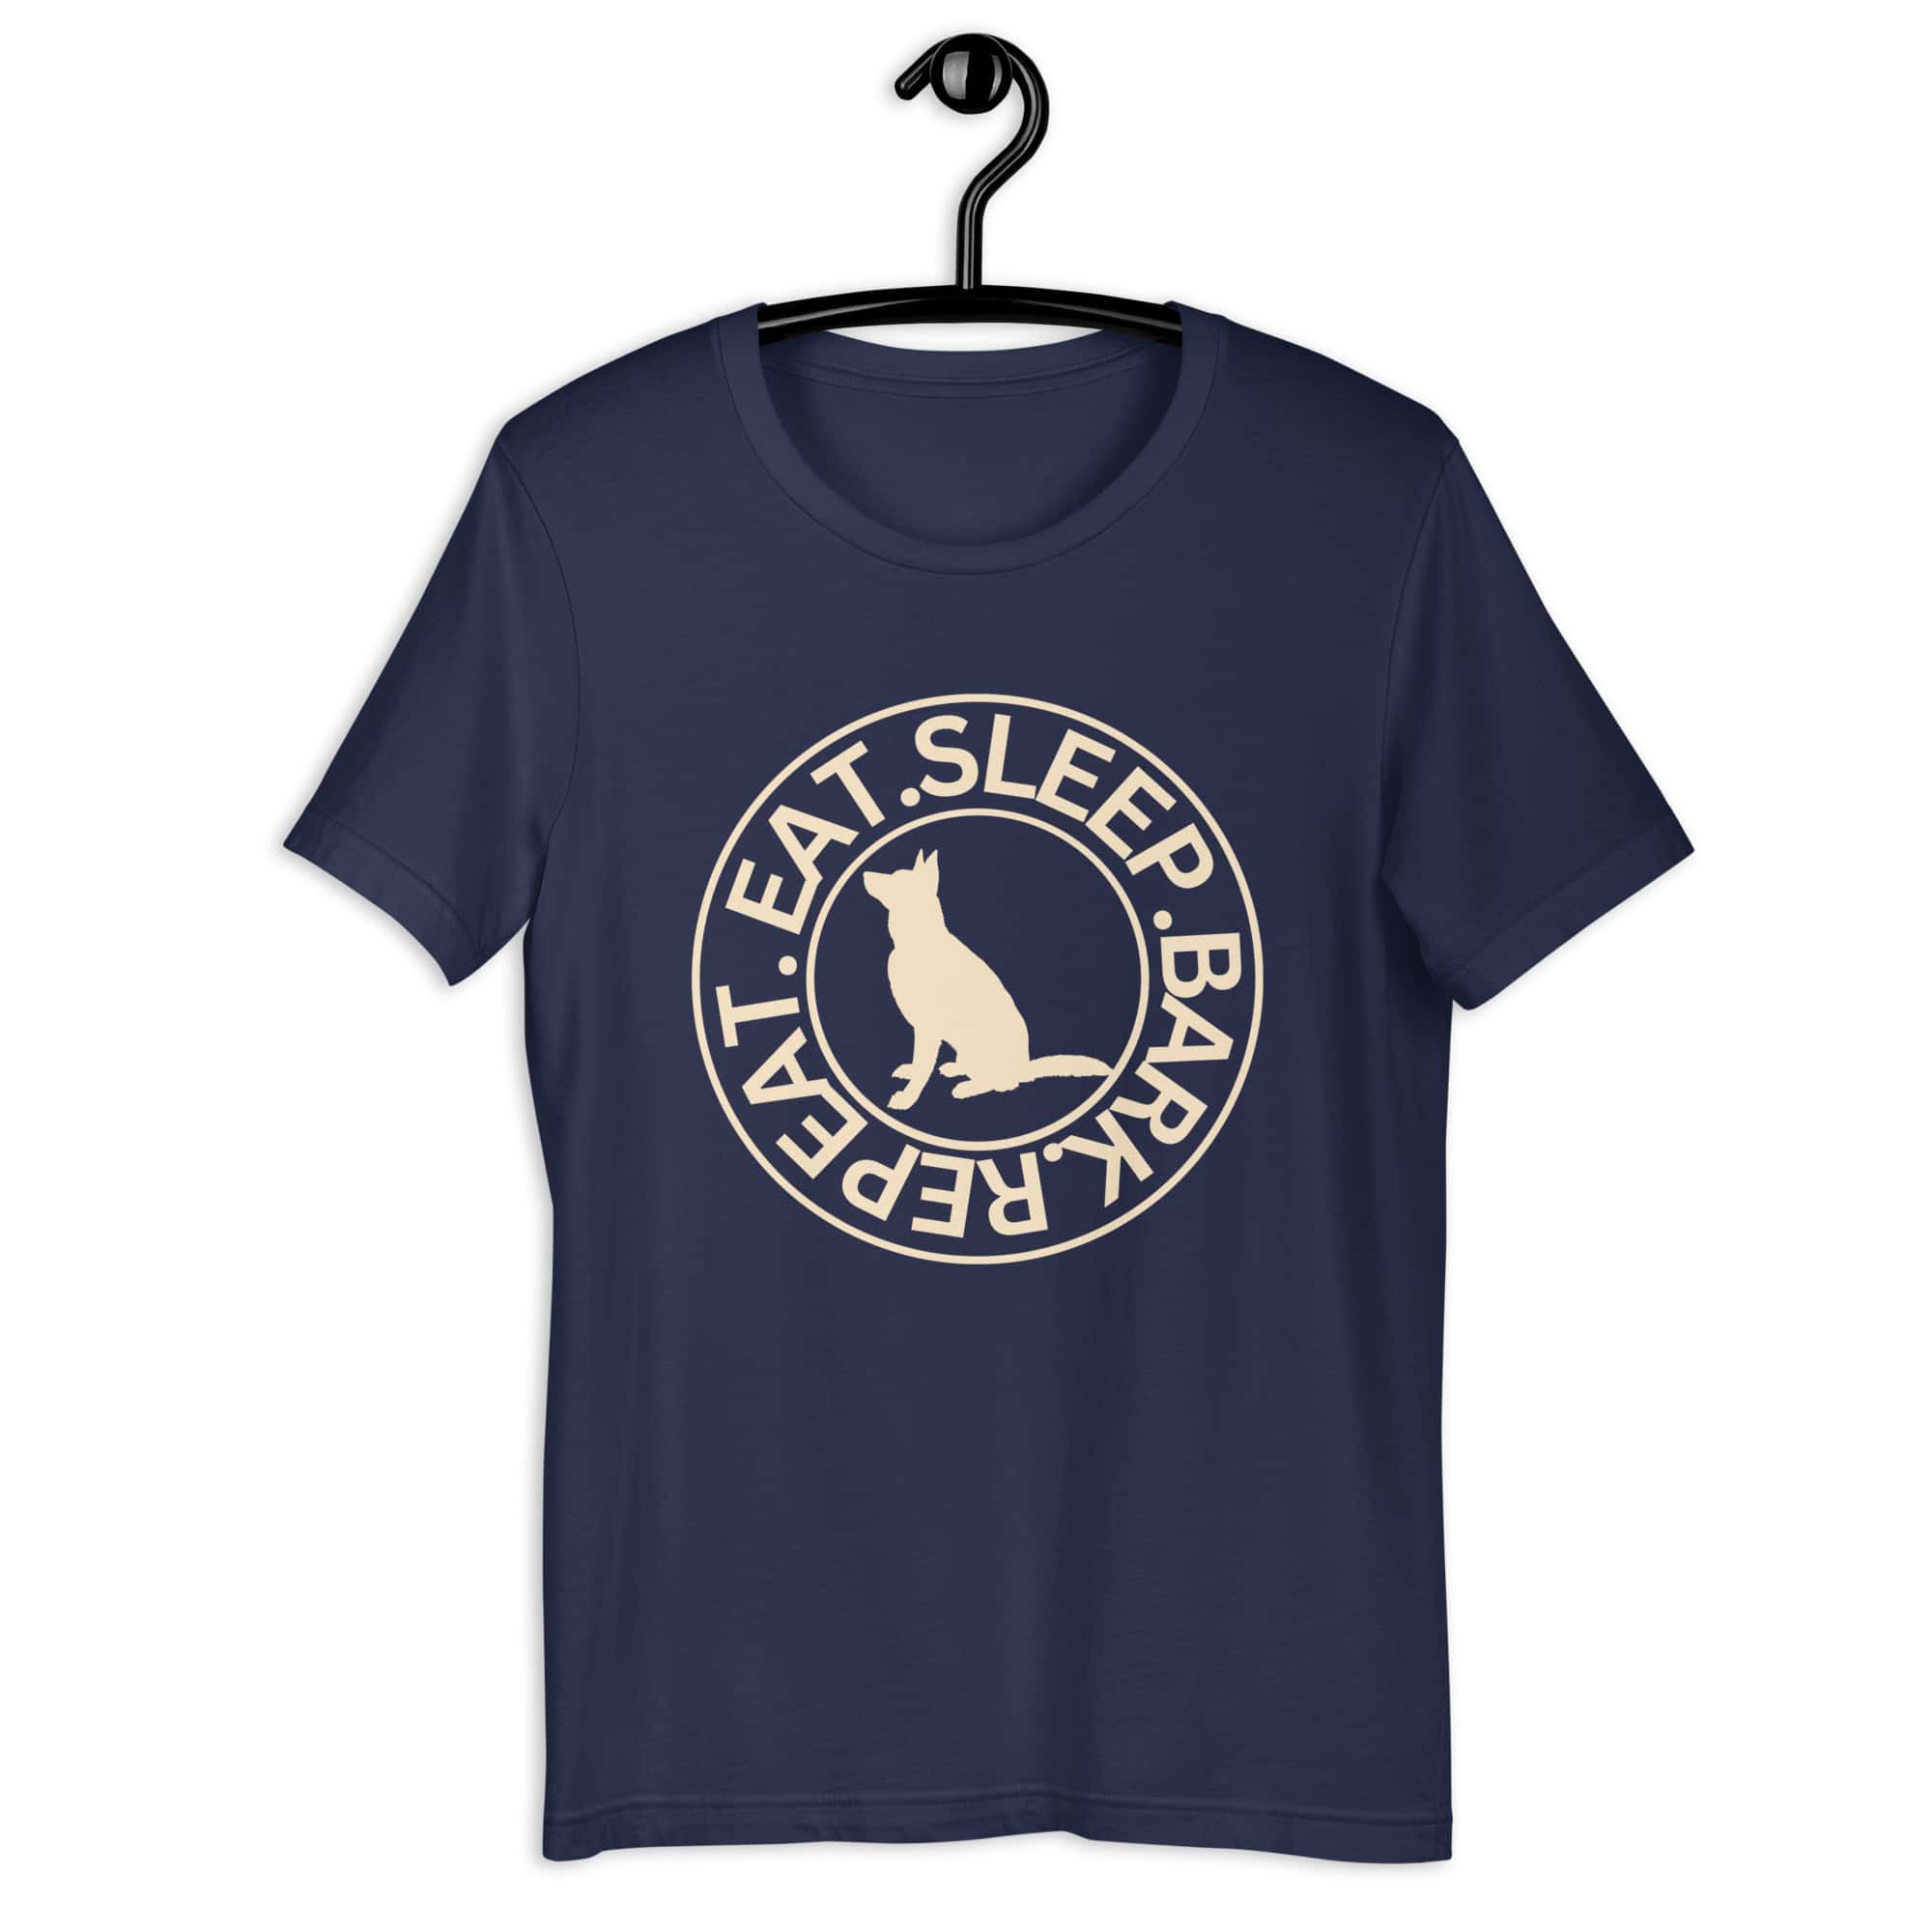 Eat Sleep Bark Repeat German Shepherd Unisex T-Shirt. Navy Blue